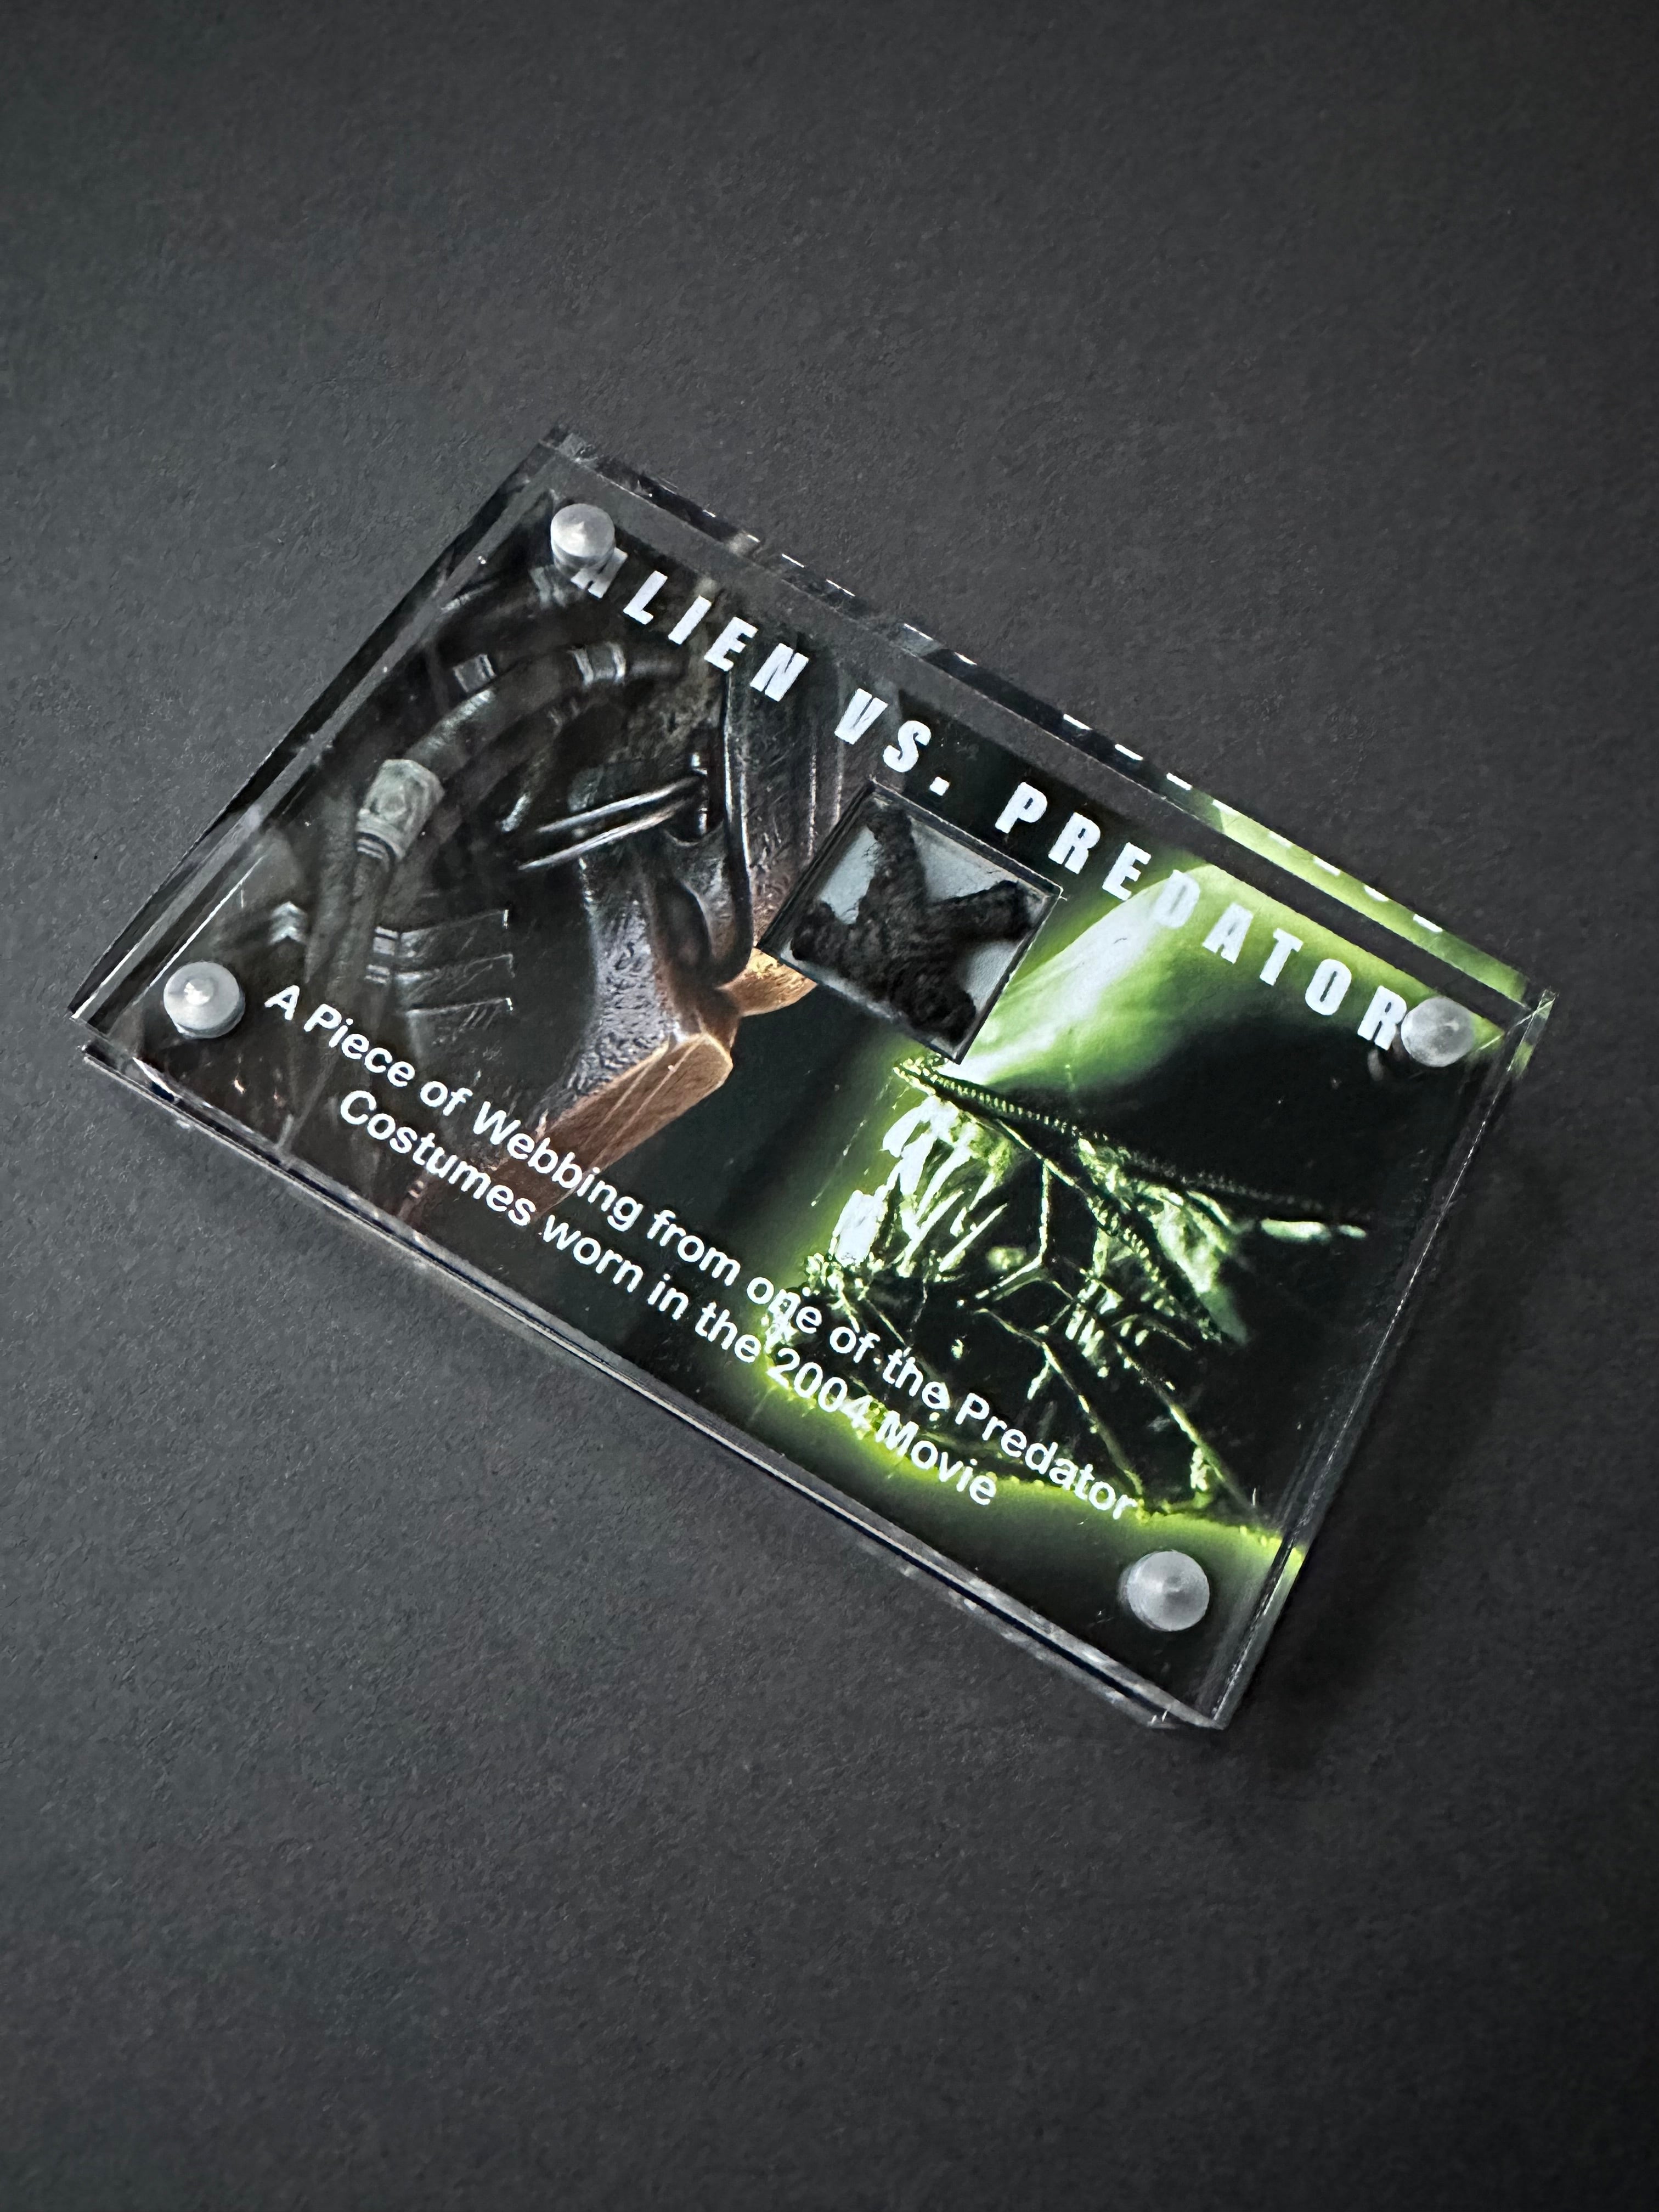 Alien vs. Predator (2004) - A Miniature Prop Display